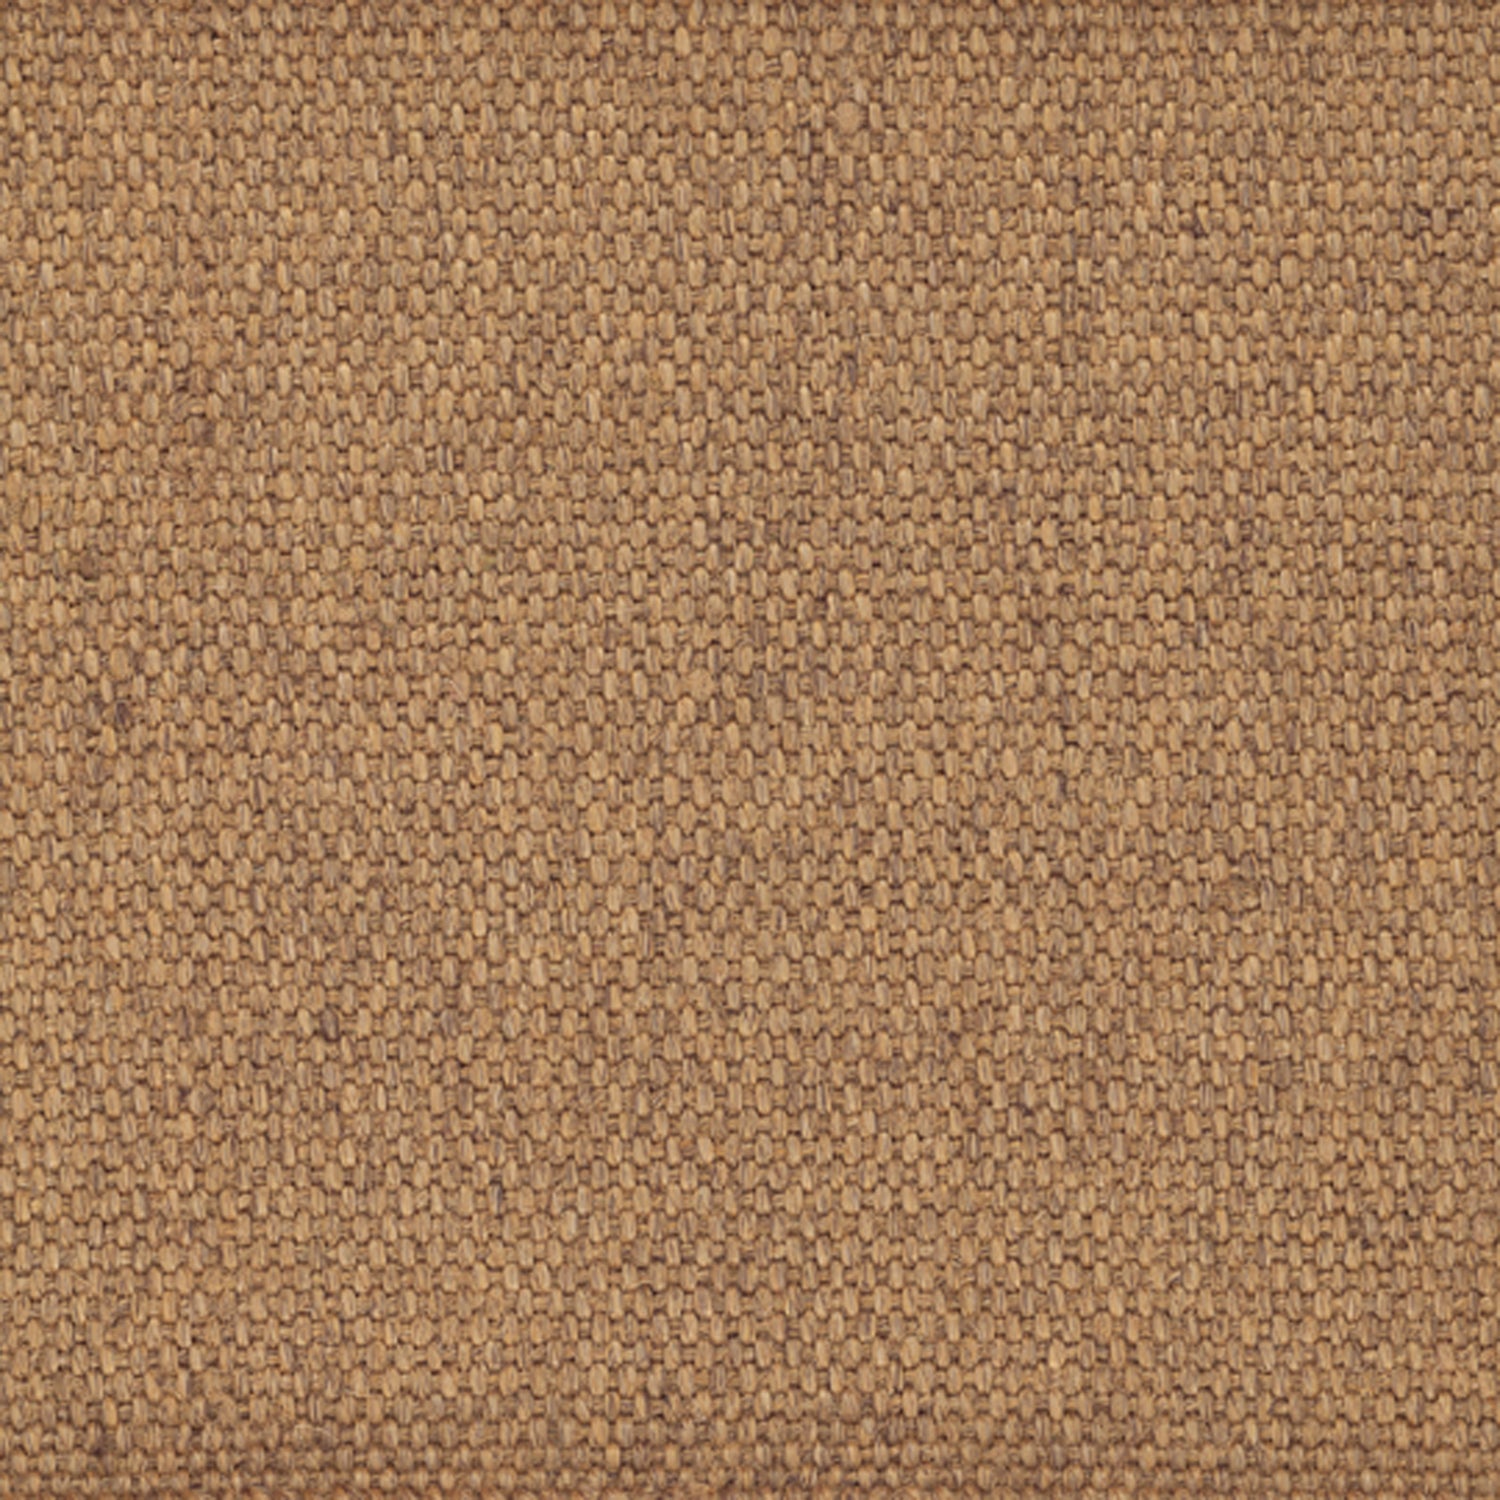 Sisal broadloom carpet swatch in a flat grid weave in "Toasty" brown.